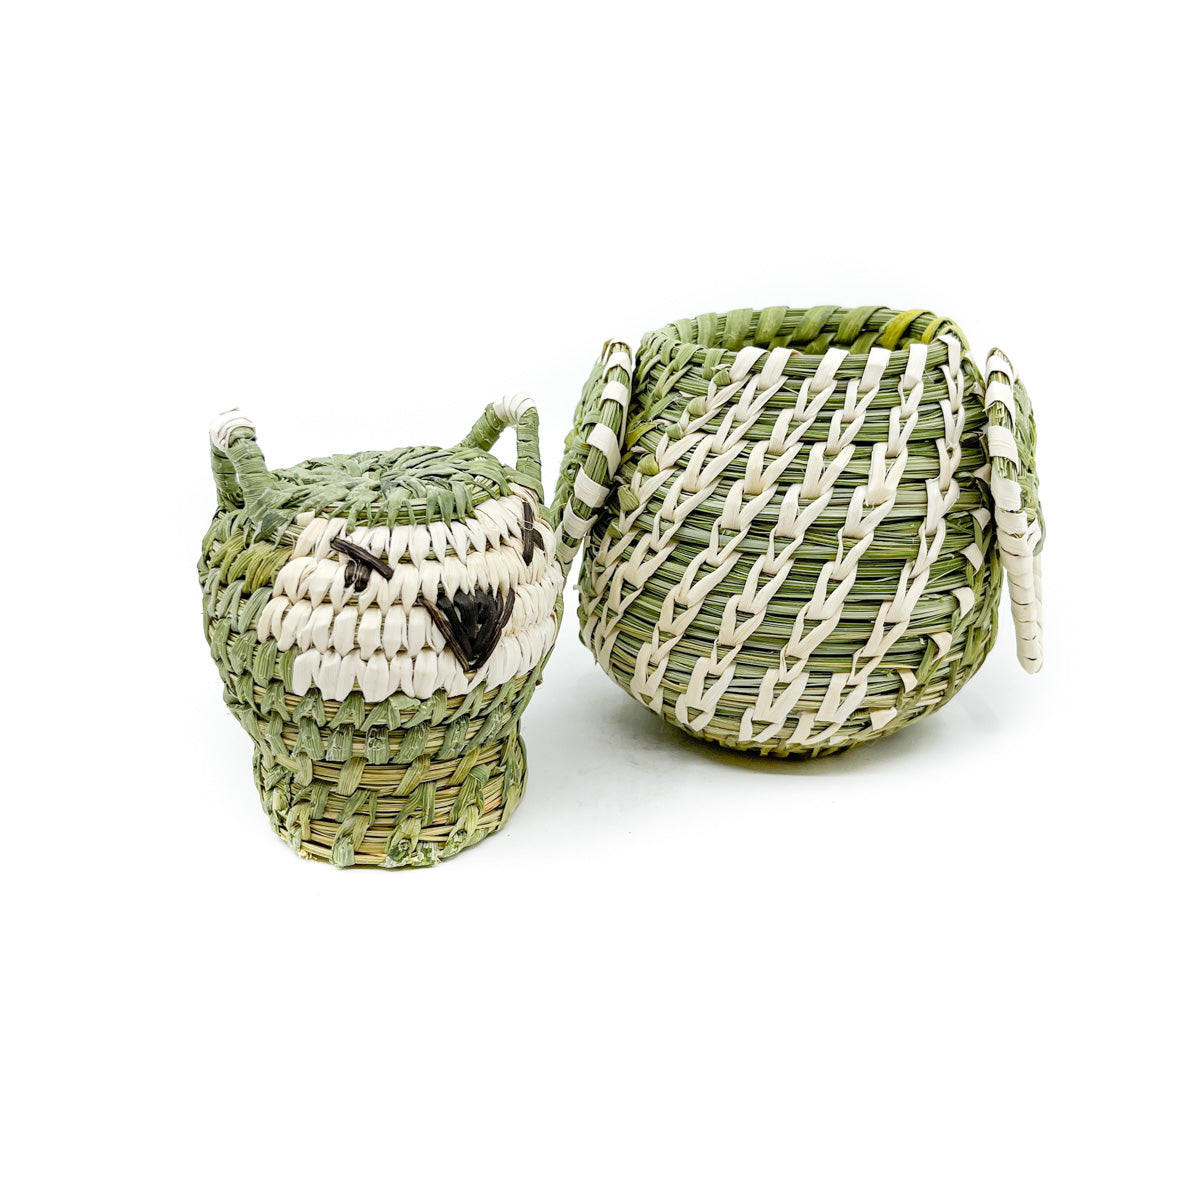 Owl Sculpture Basket - Tohono O'odham